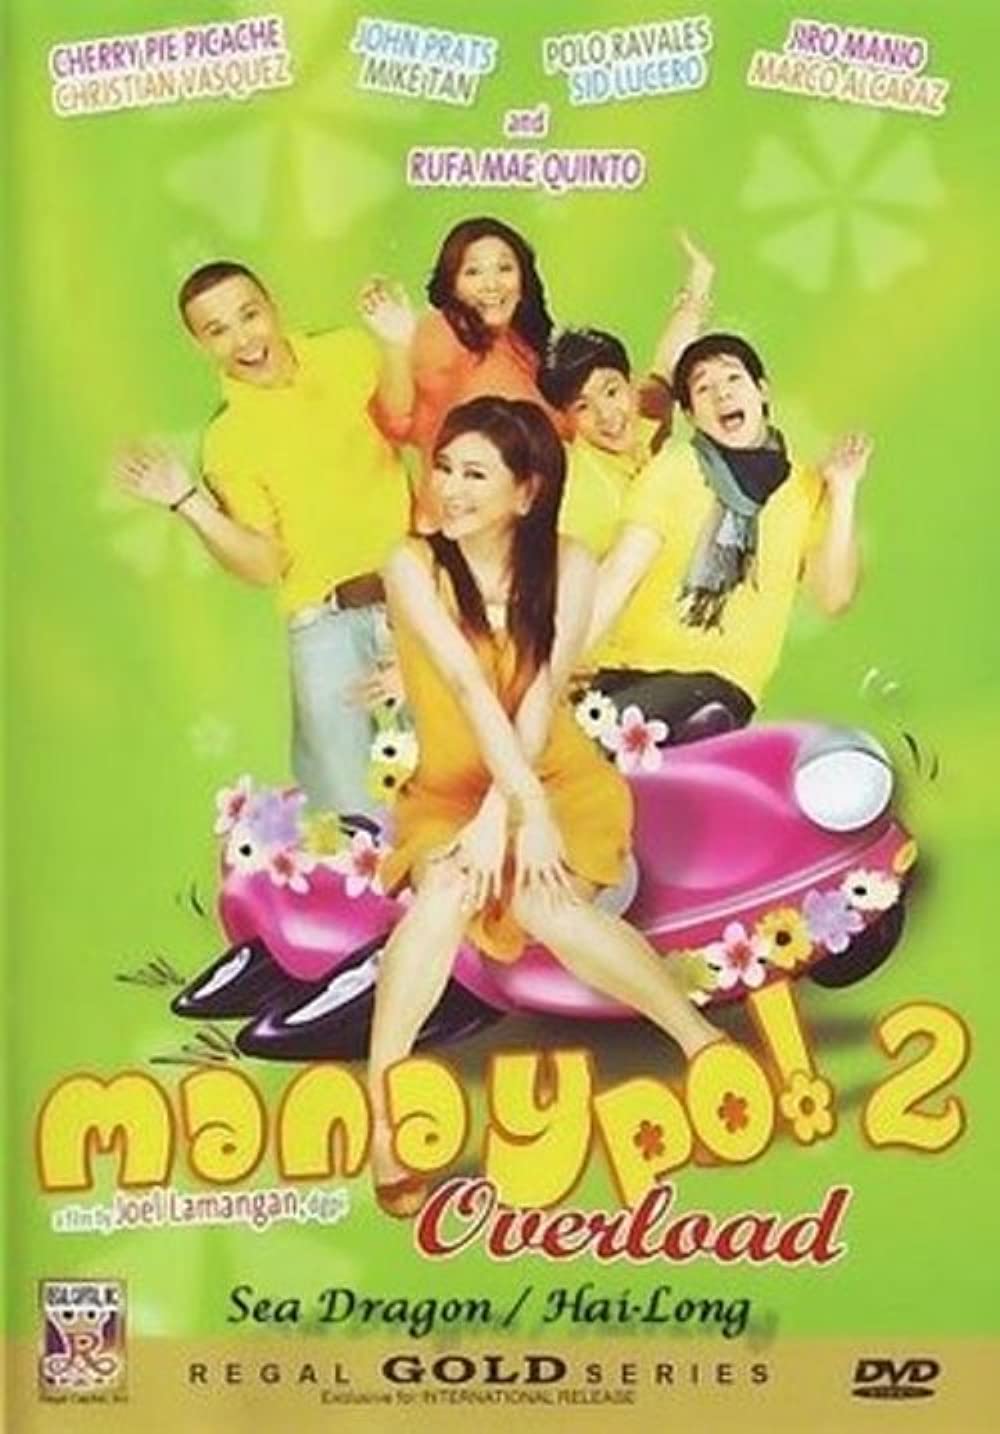 Manay Po 2: Overload - seriesboyslove.es